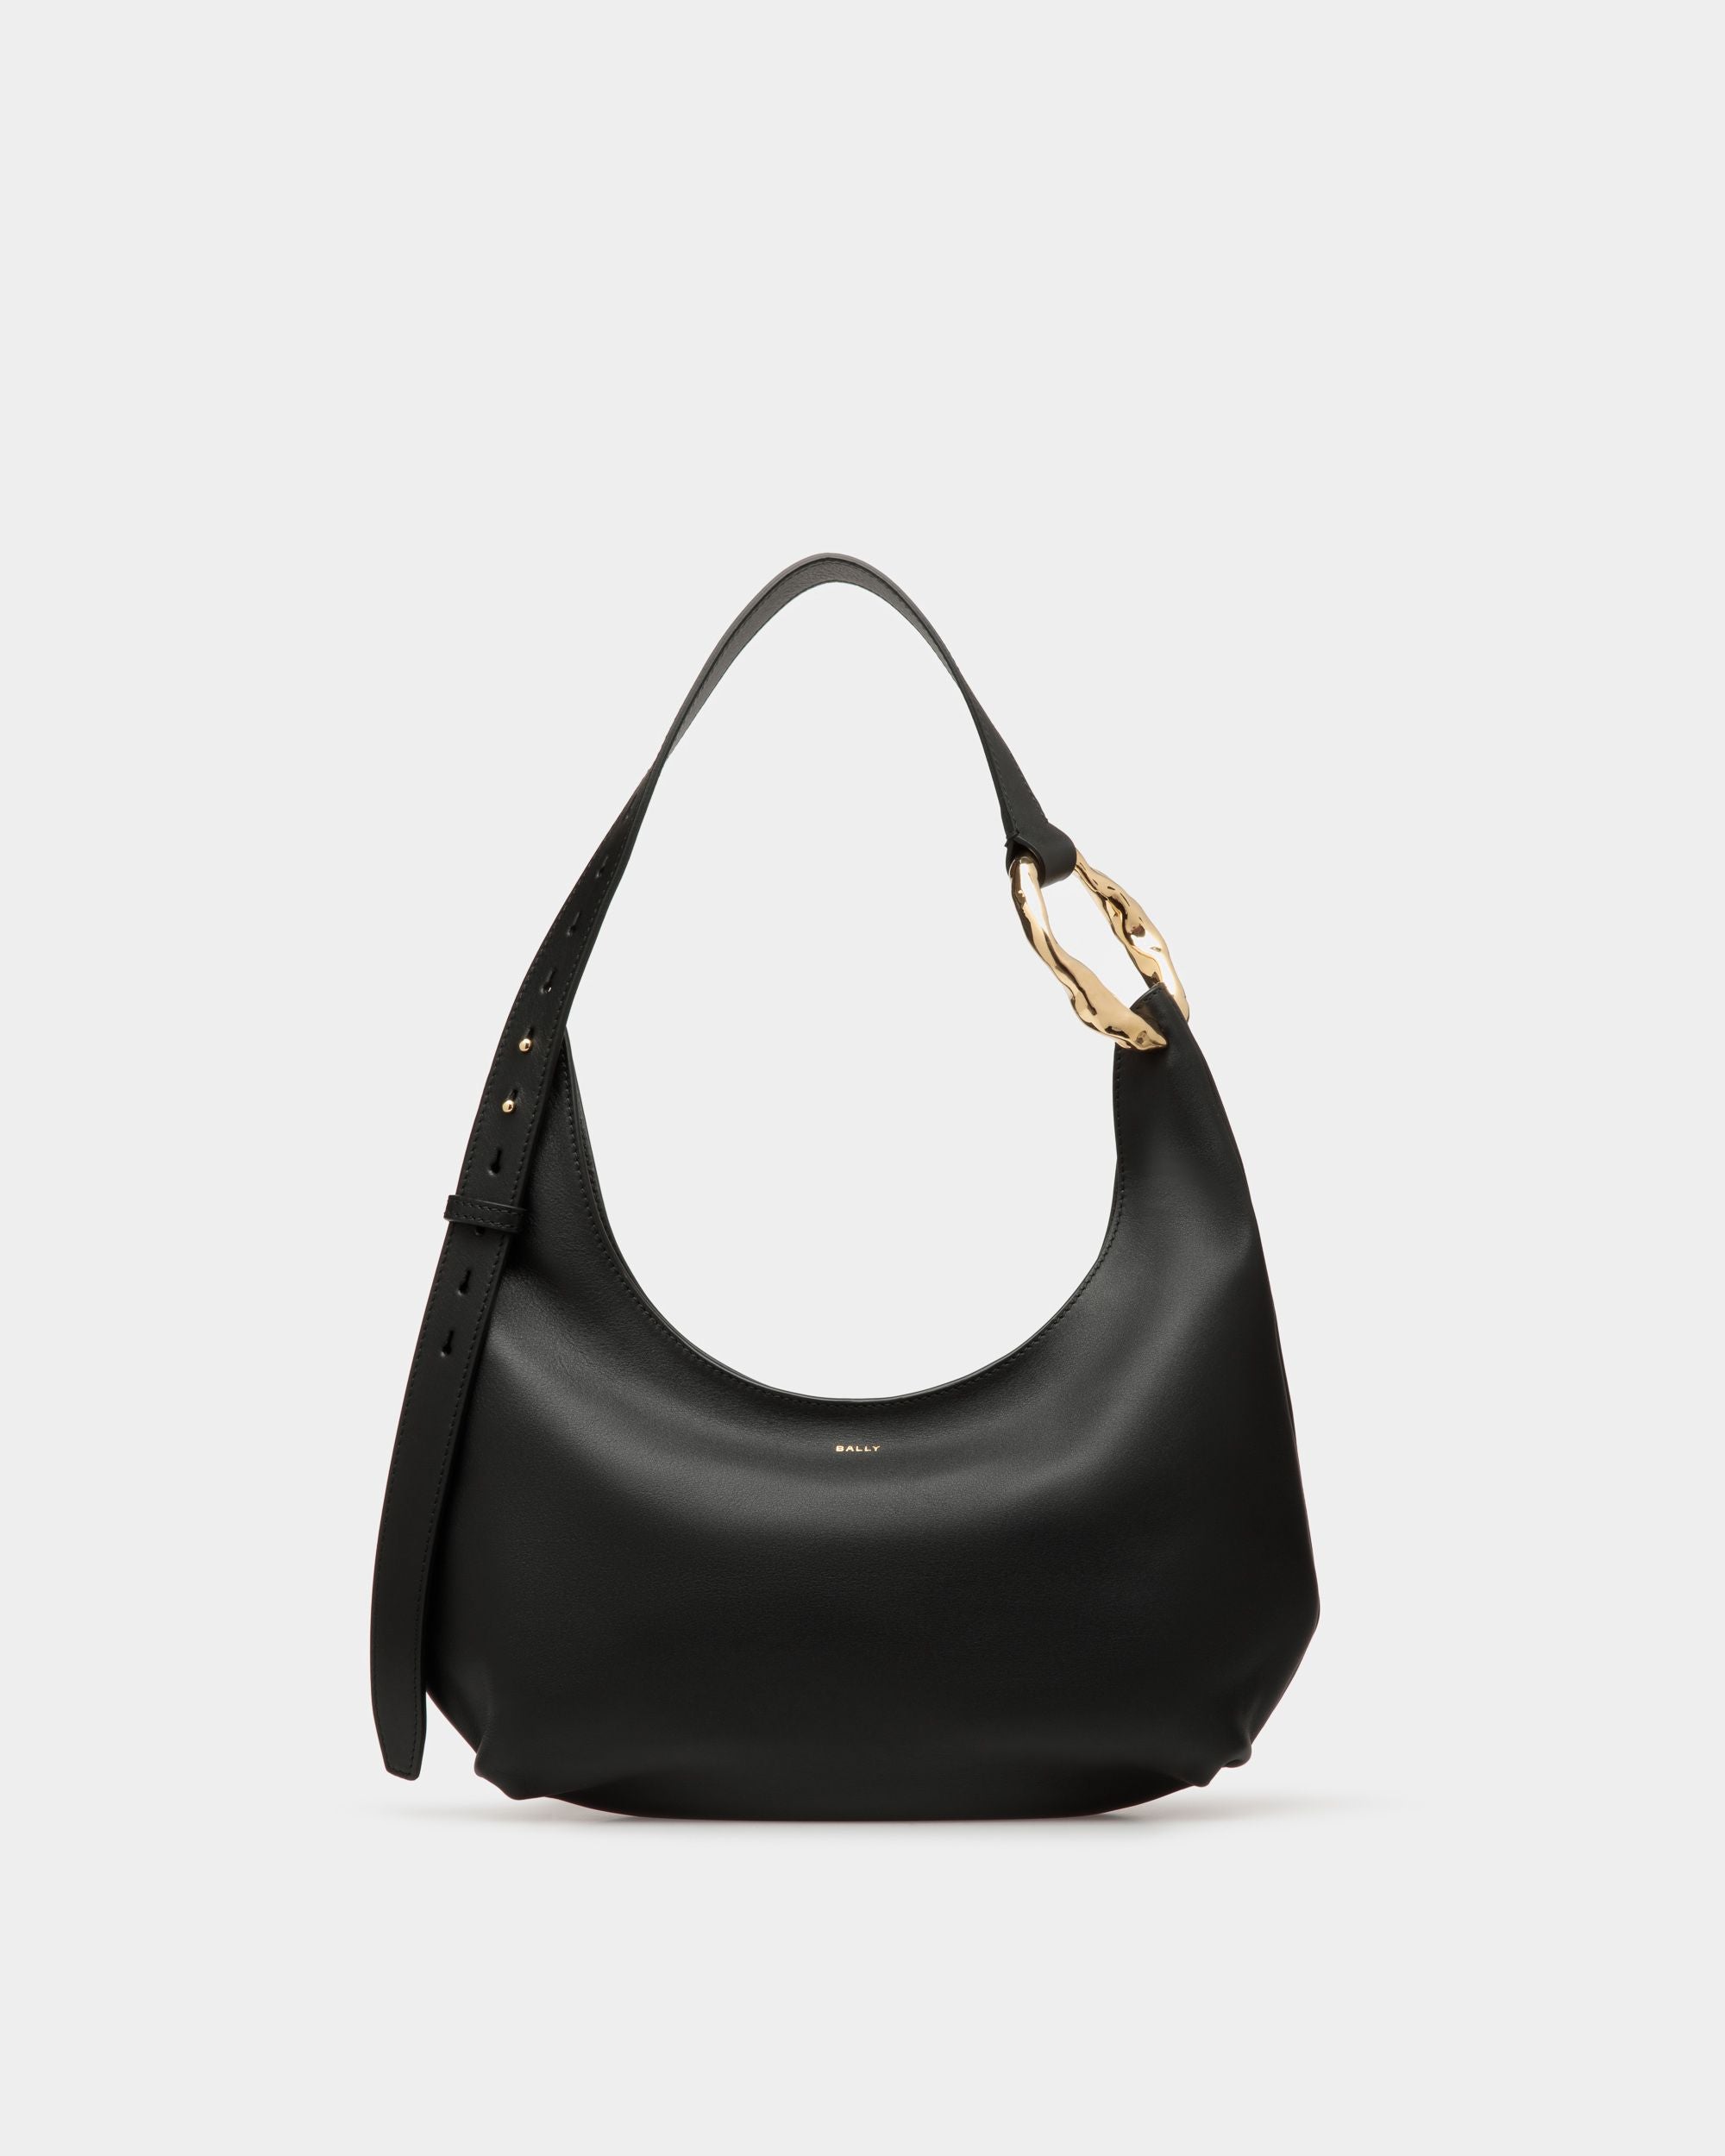 Baroque Ring | Women's Shoulder Bag | Black Leather | Bally | Still Life Front